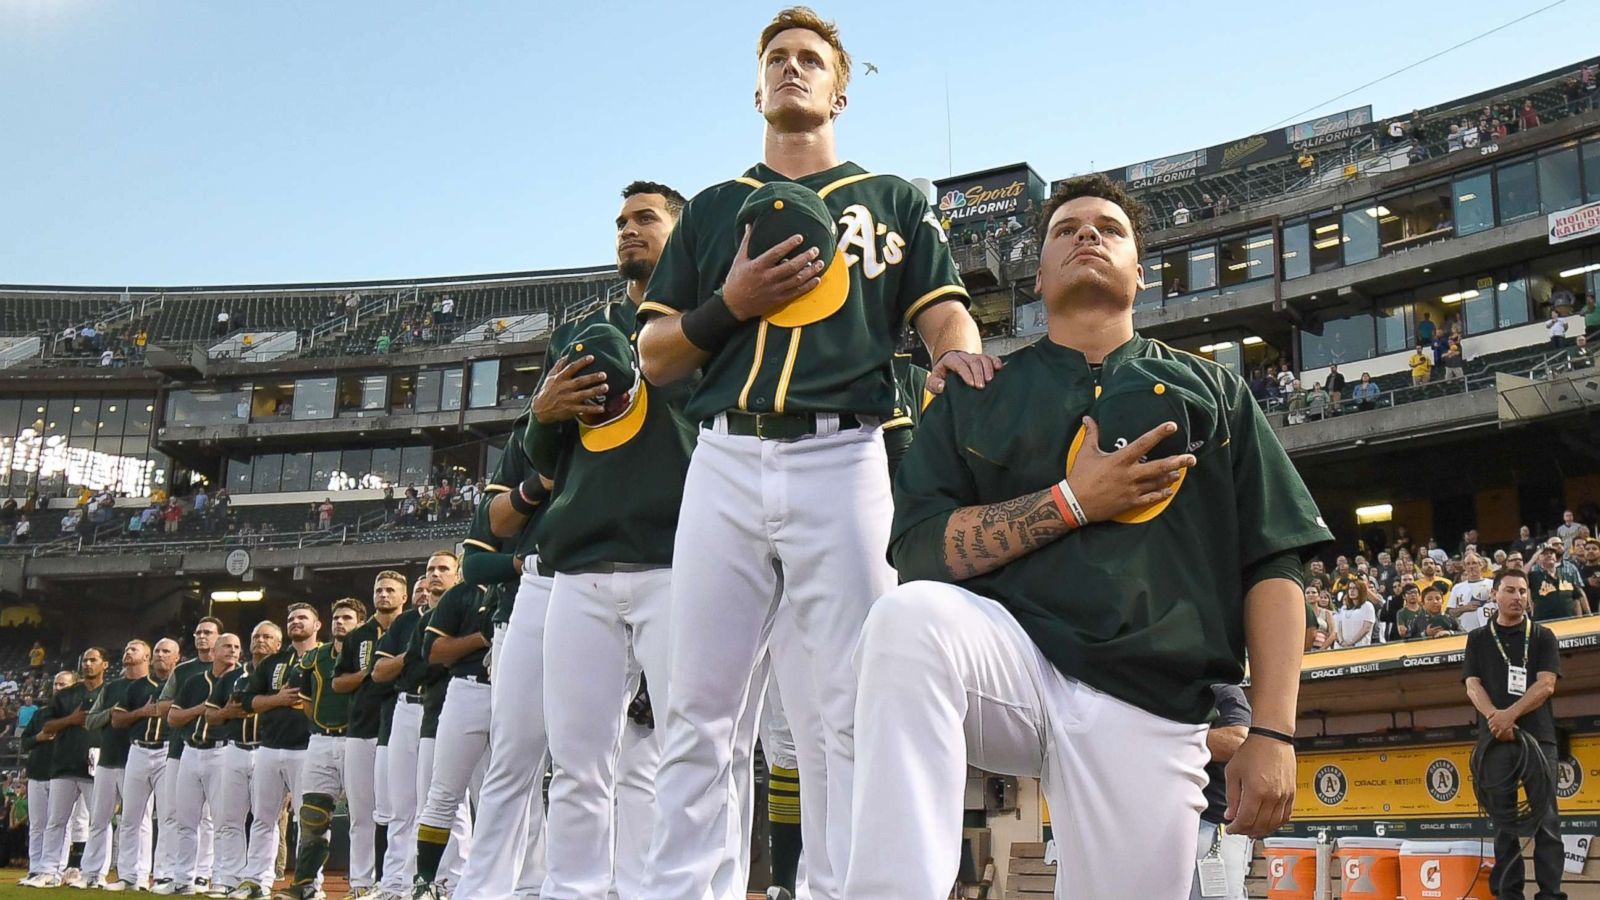 MLB culture war over LGBTQ+ patch on uniform